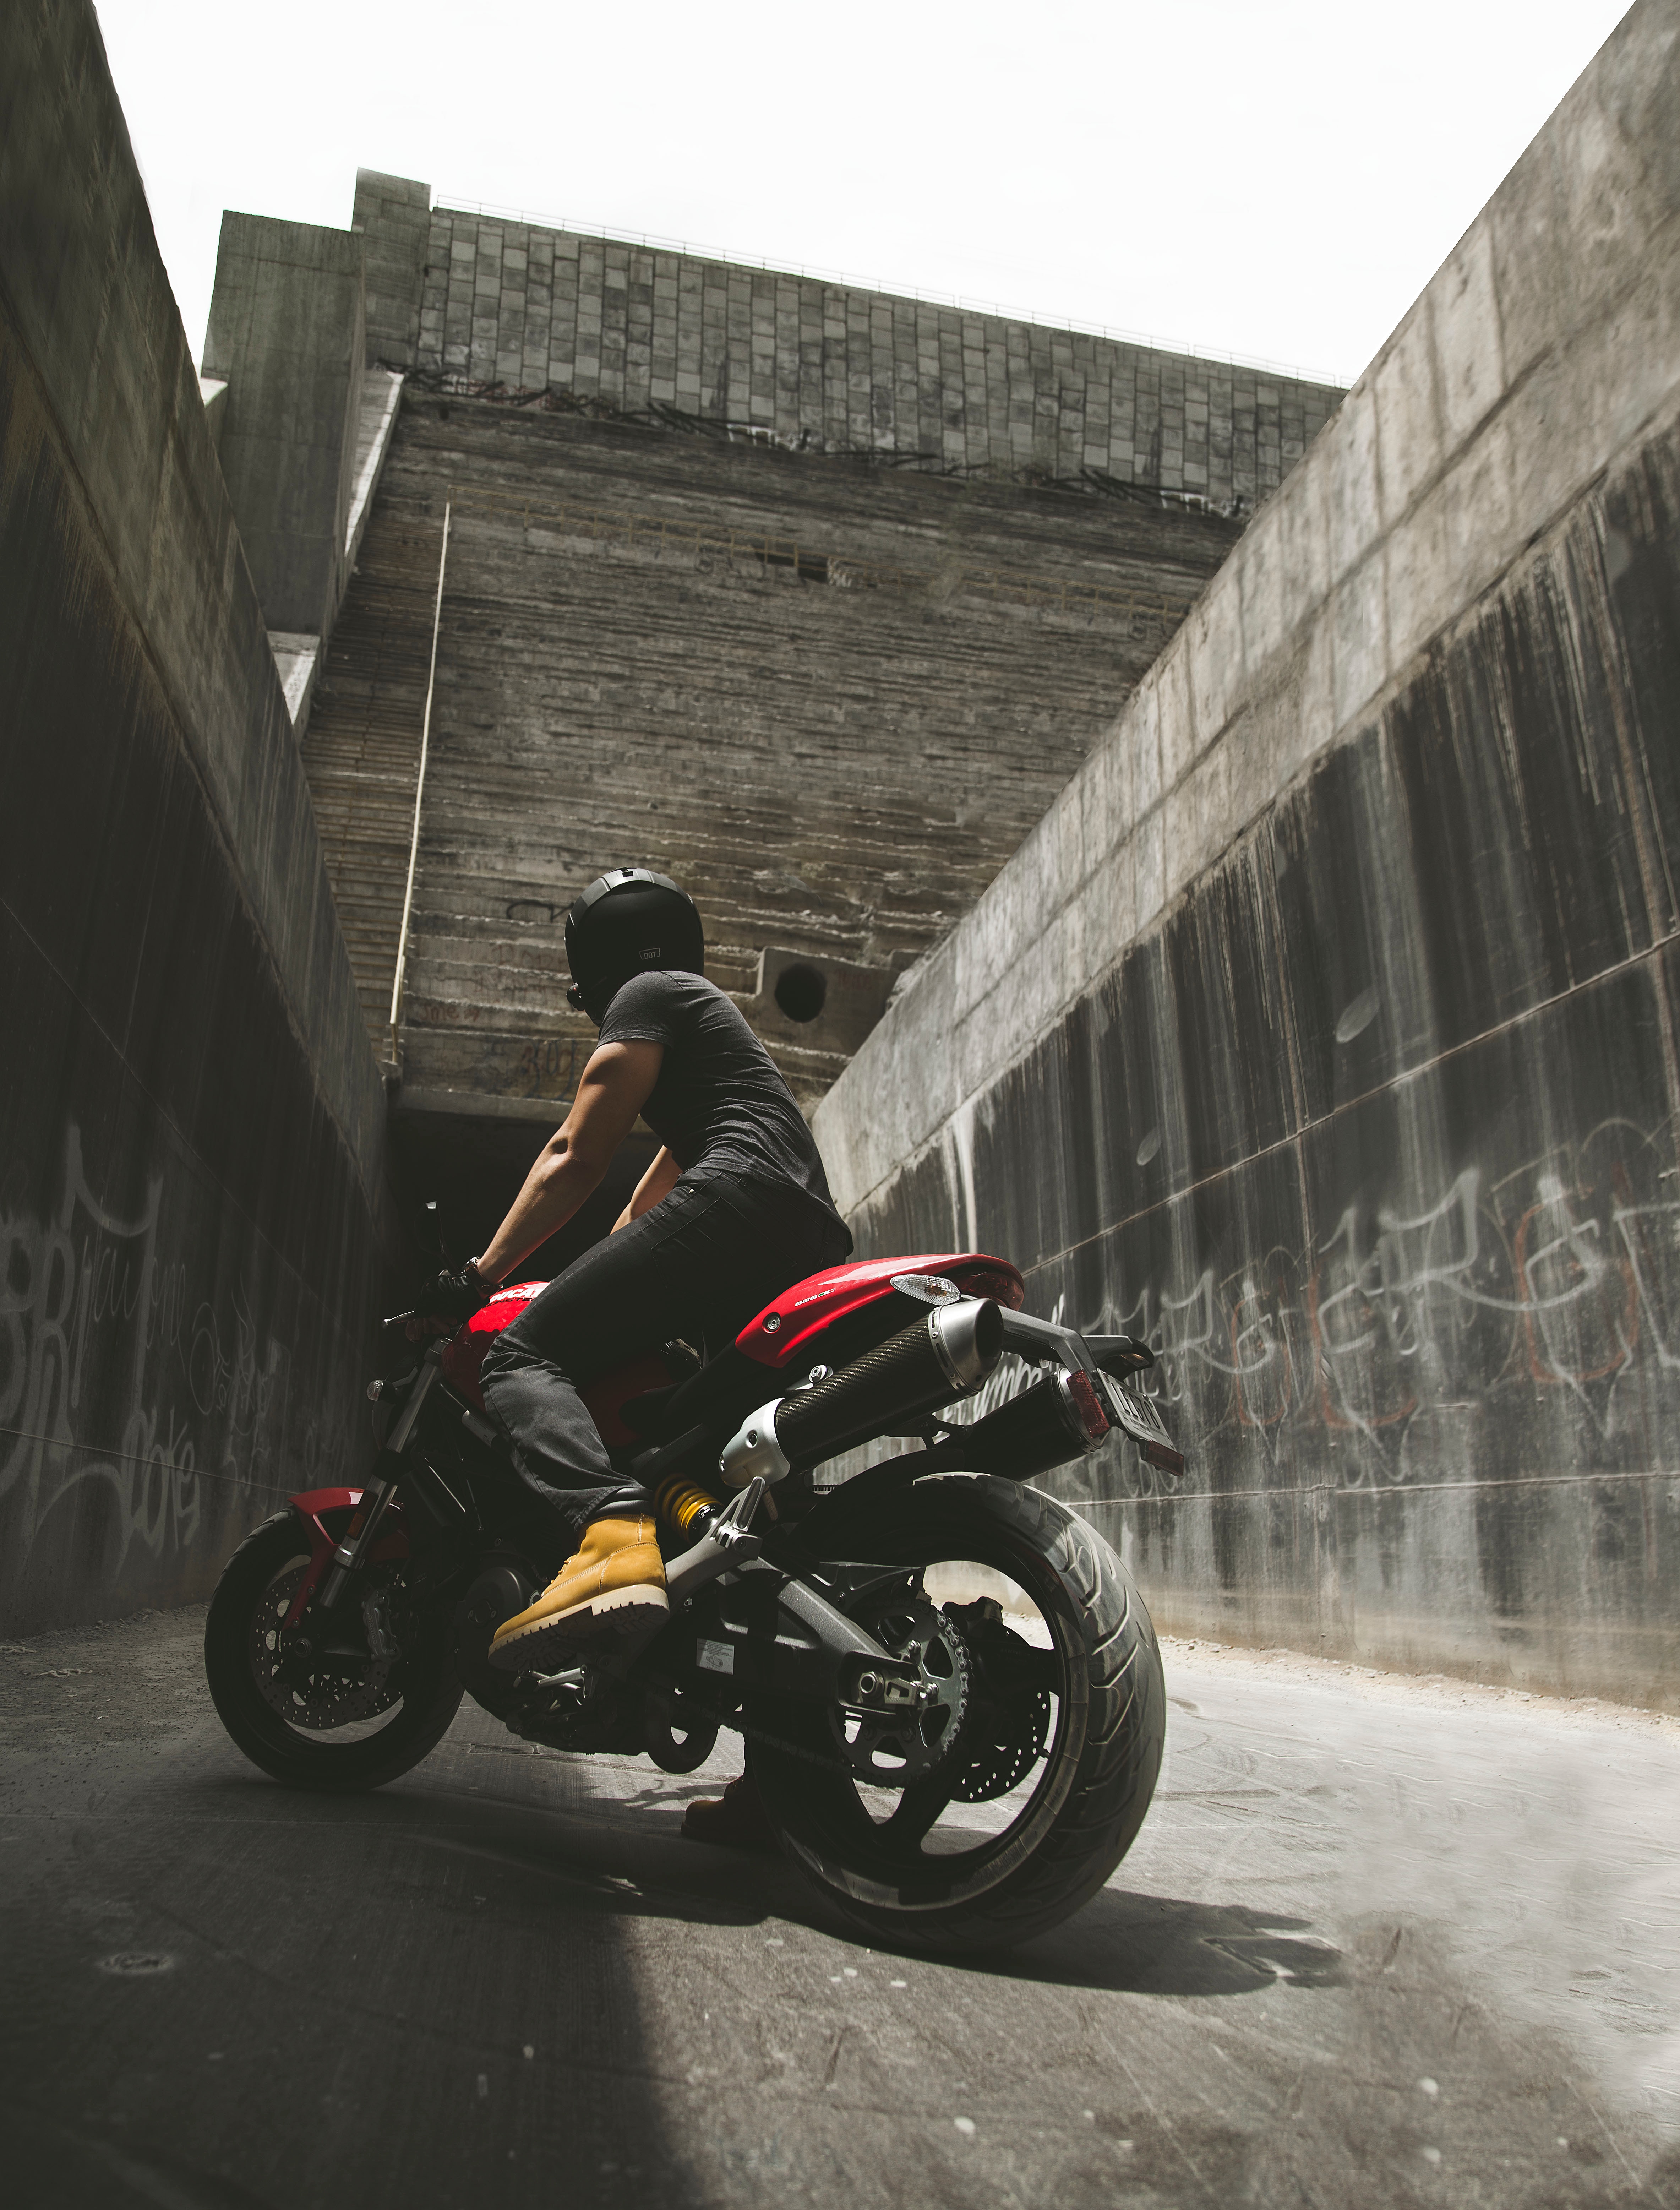 motorcyclist, concrete, walls, motorcycles, helmet, motorcycle